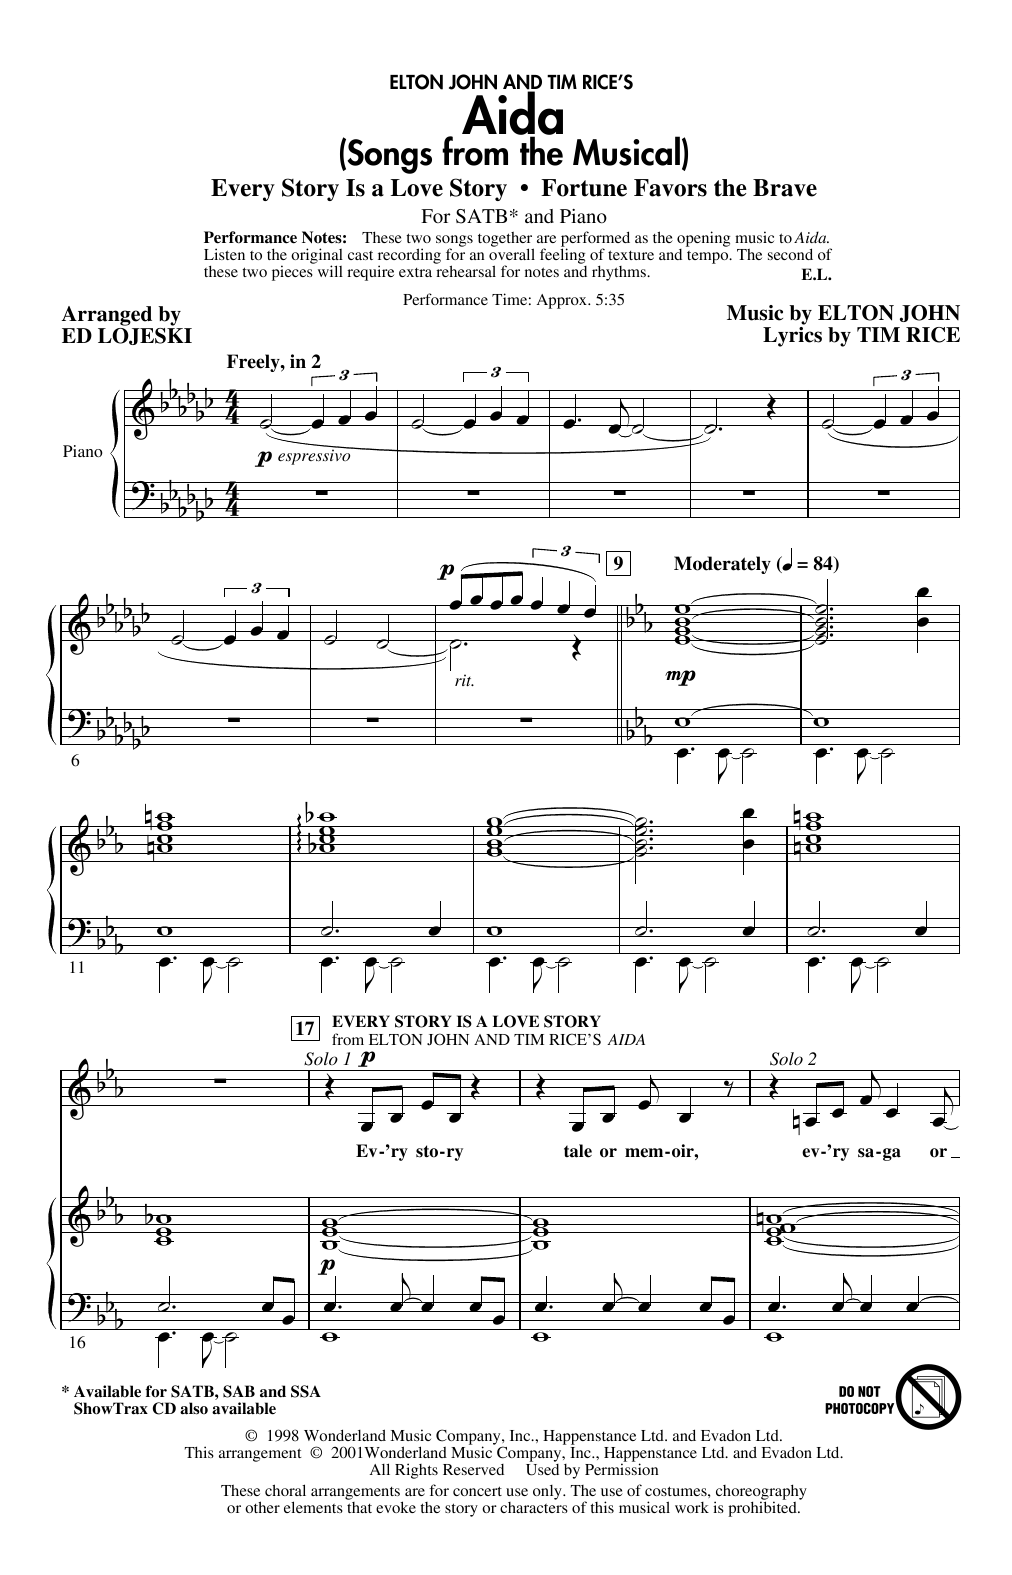 Elton John & Tim Rice Aida (Songs from the Musical) (arr. Ed Lojeski) Sheet Music Notes & Chords for SATB Choir - Download or Print PDF